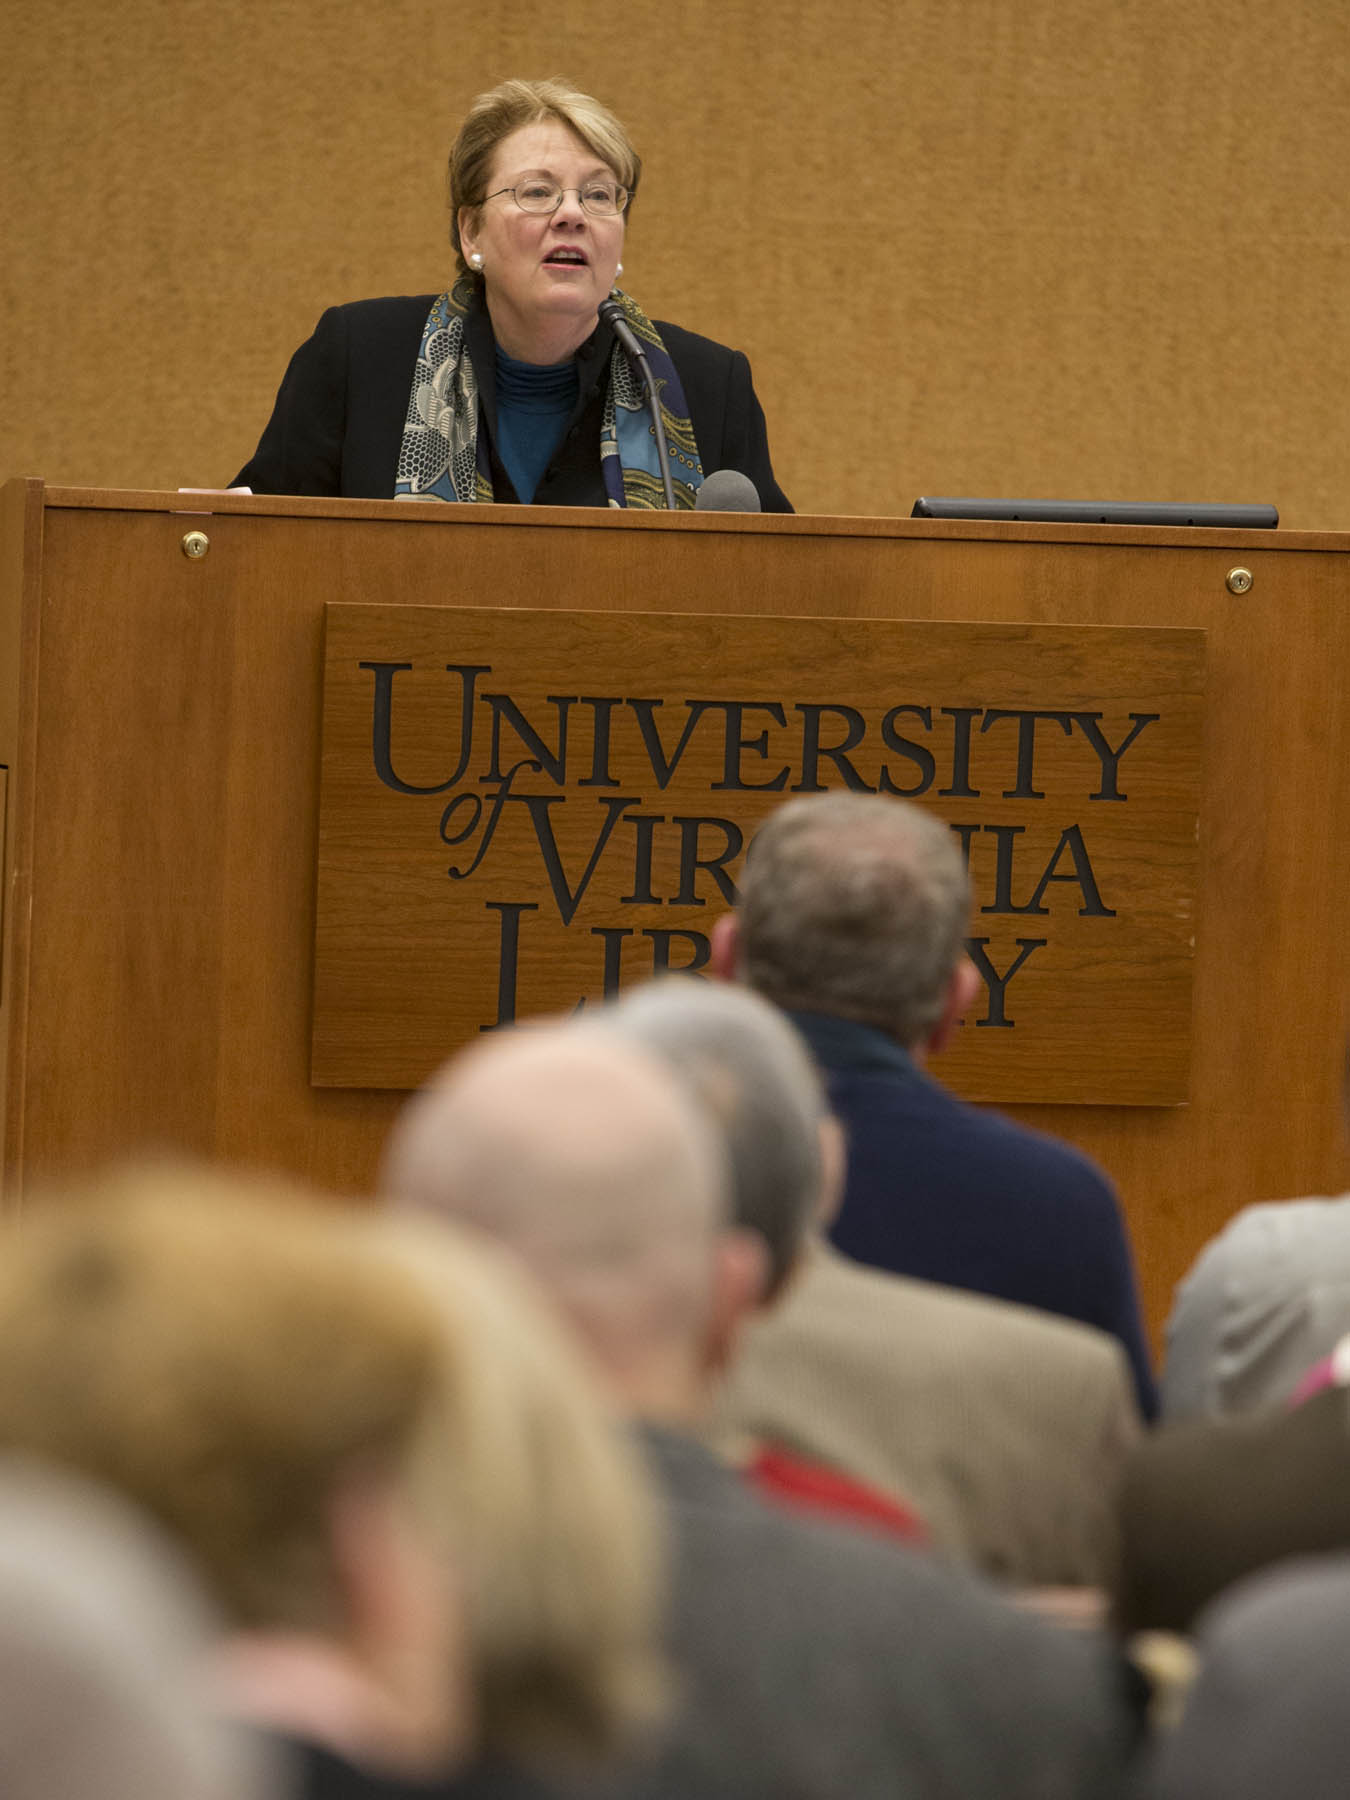 Teresa A. Sullivan speaking at a podium